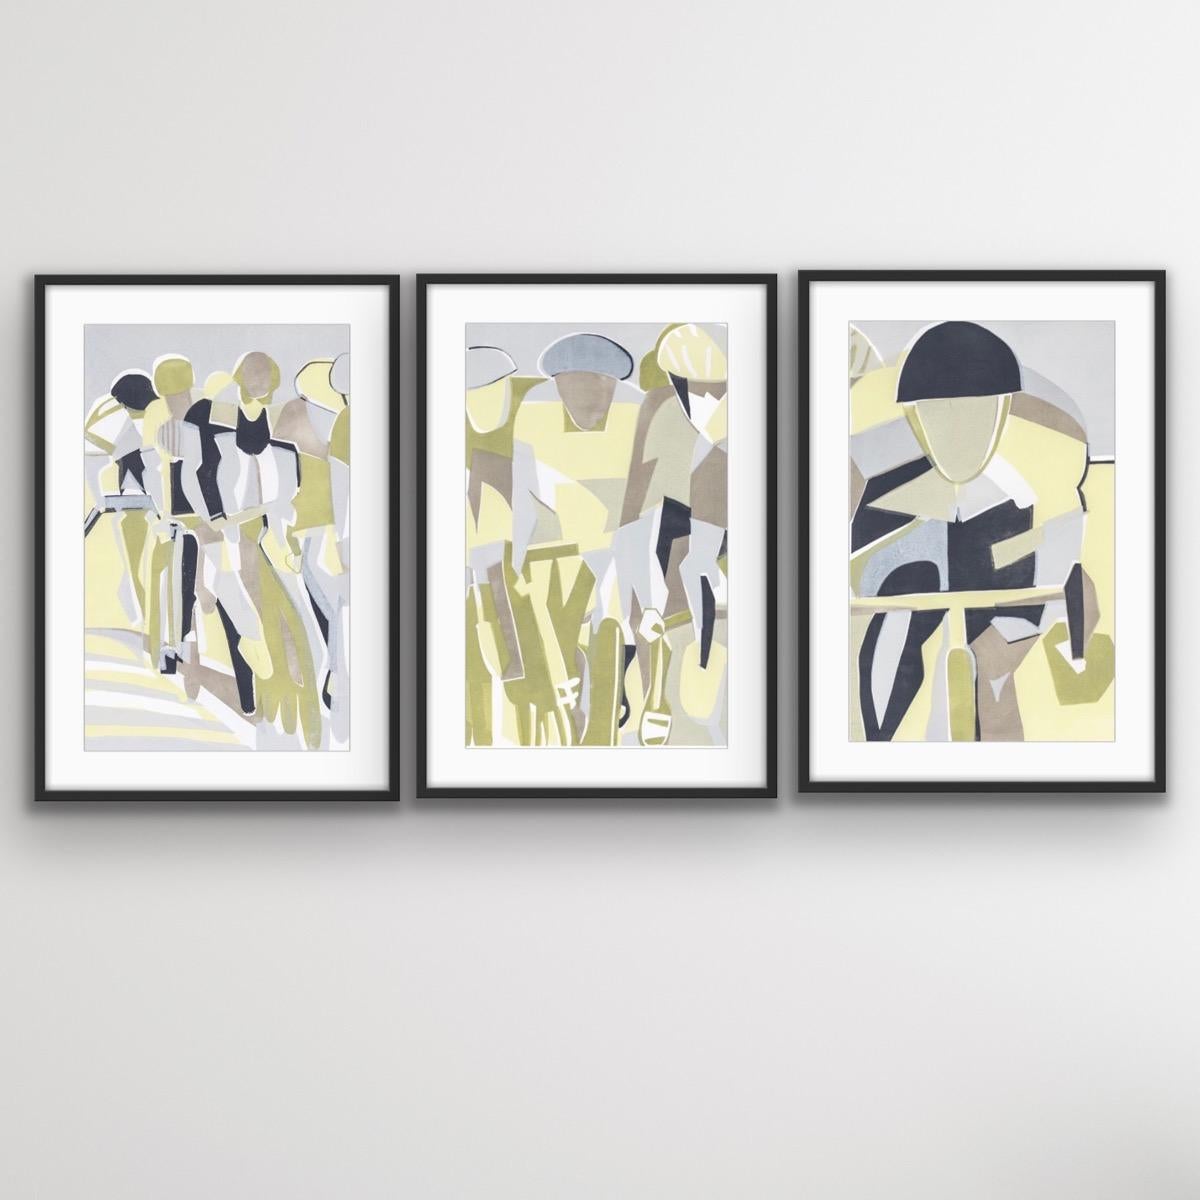 Drafting, Cyclist Art, Sports Art, Large Scale Art, Figurative Art - Contemporary Print by Lisa Takahashi